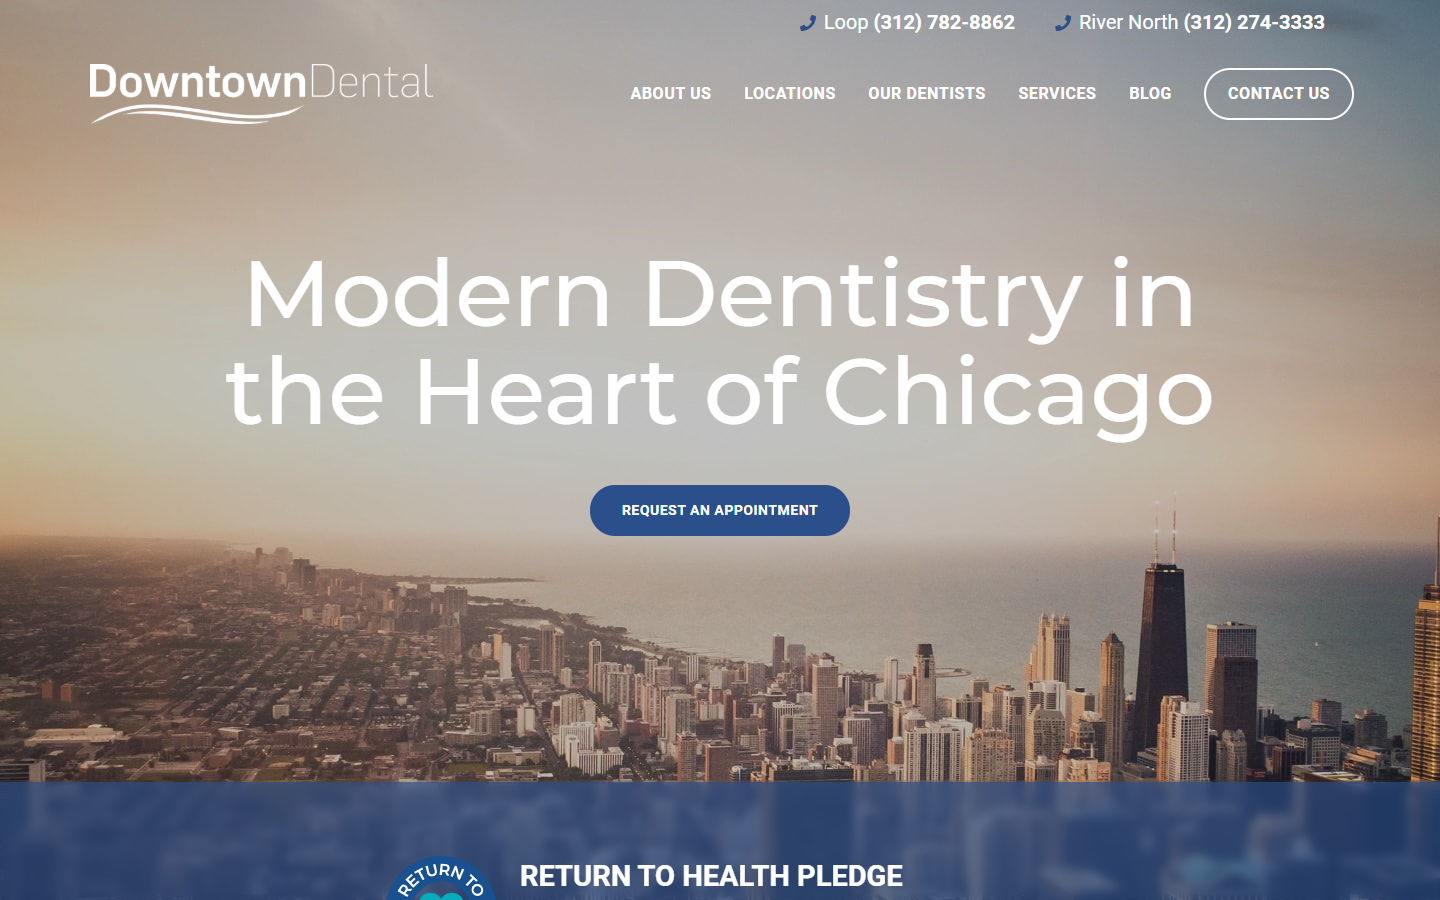 Downtown Dental Website